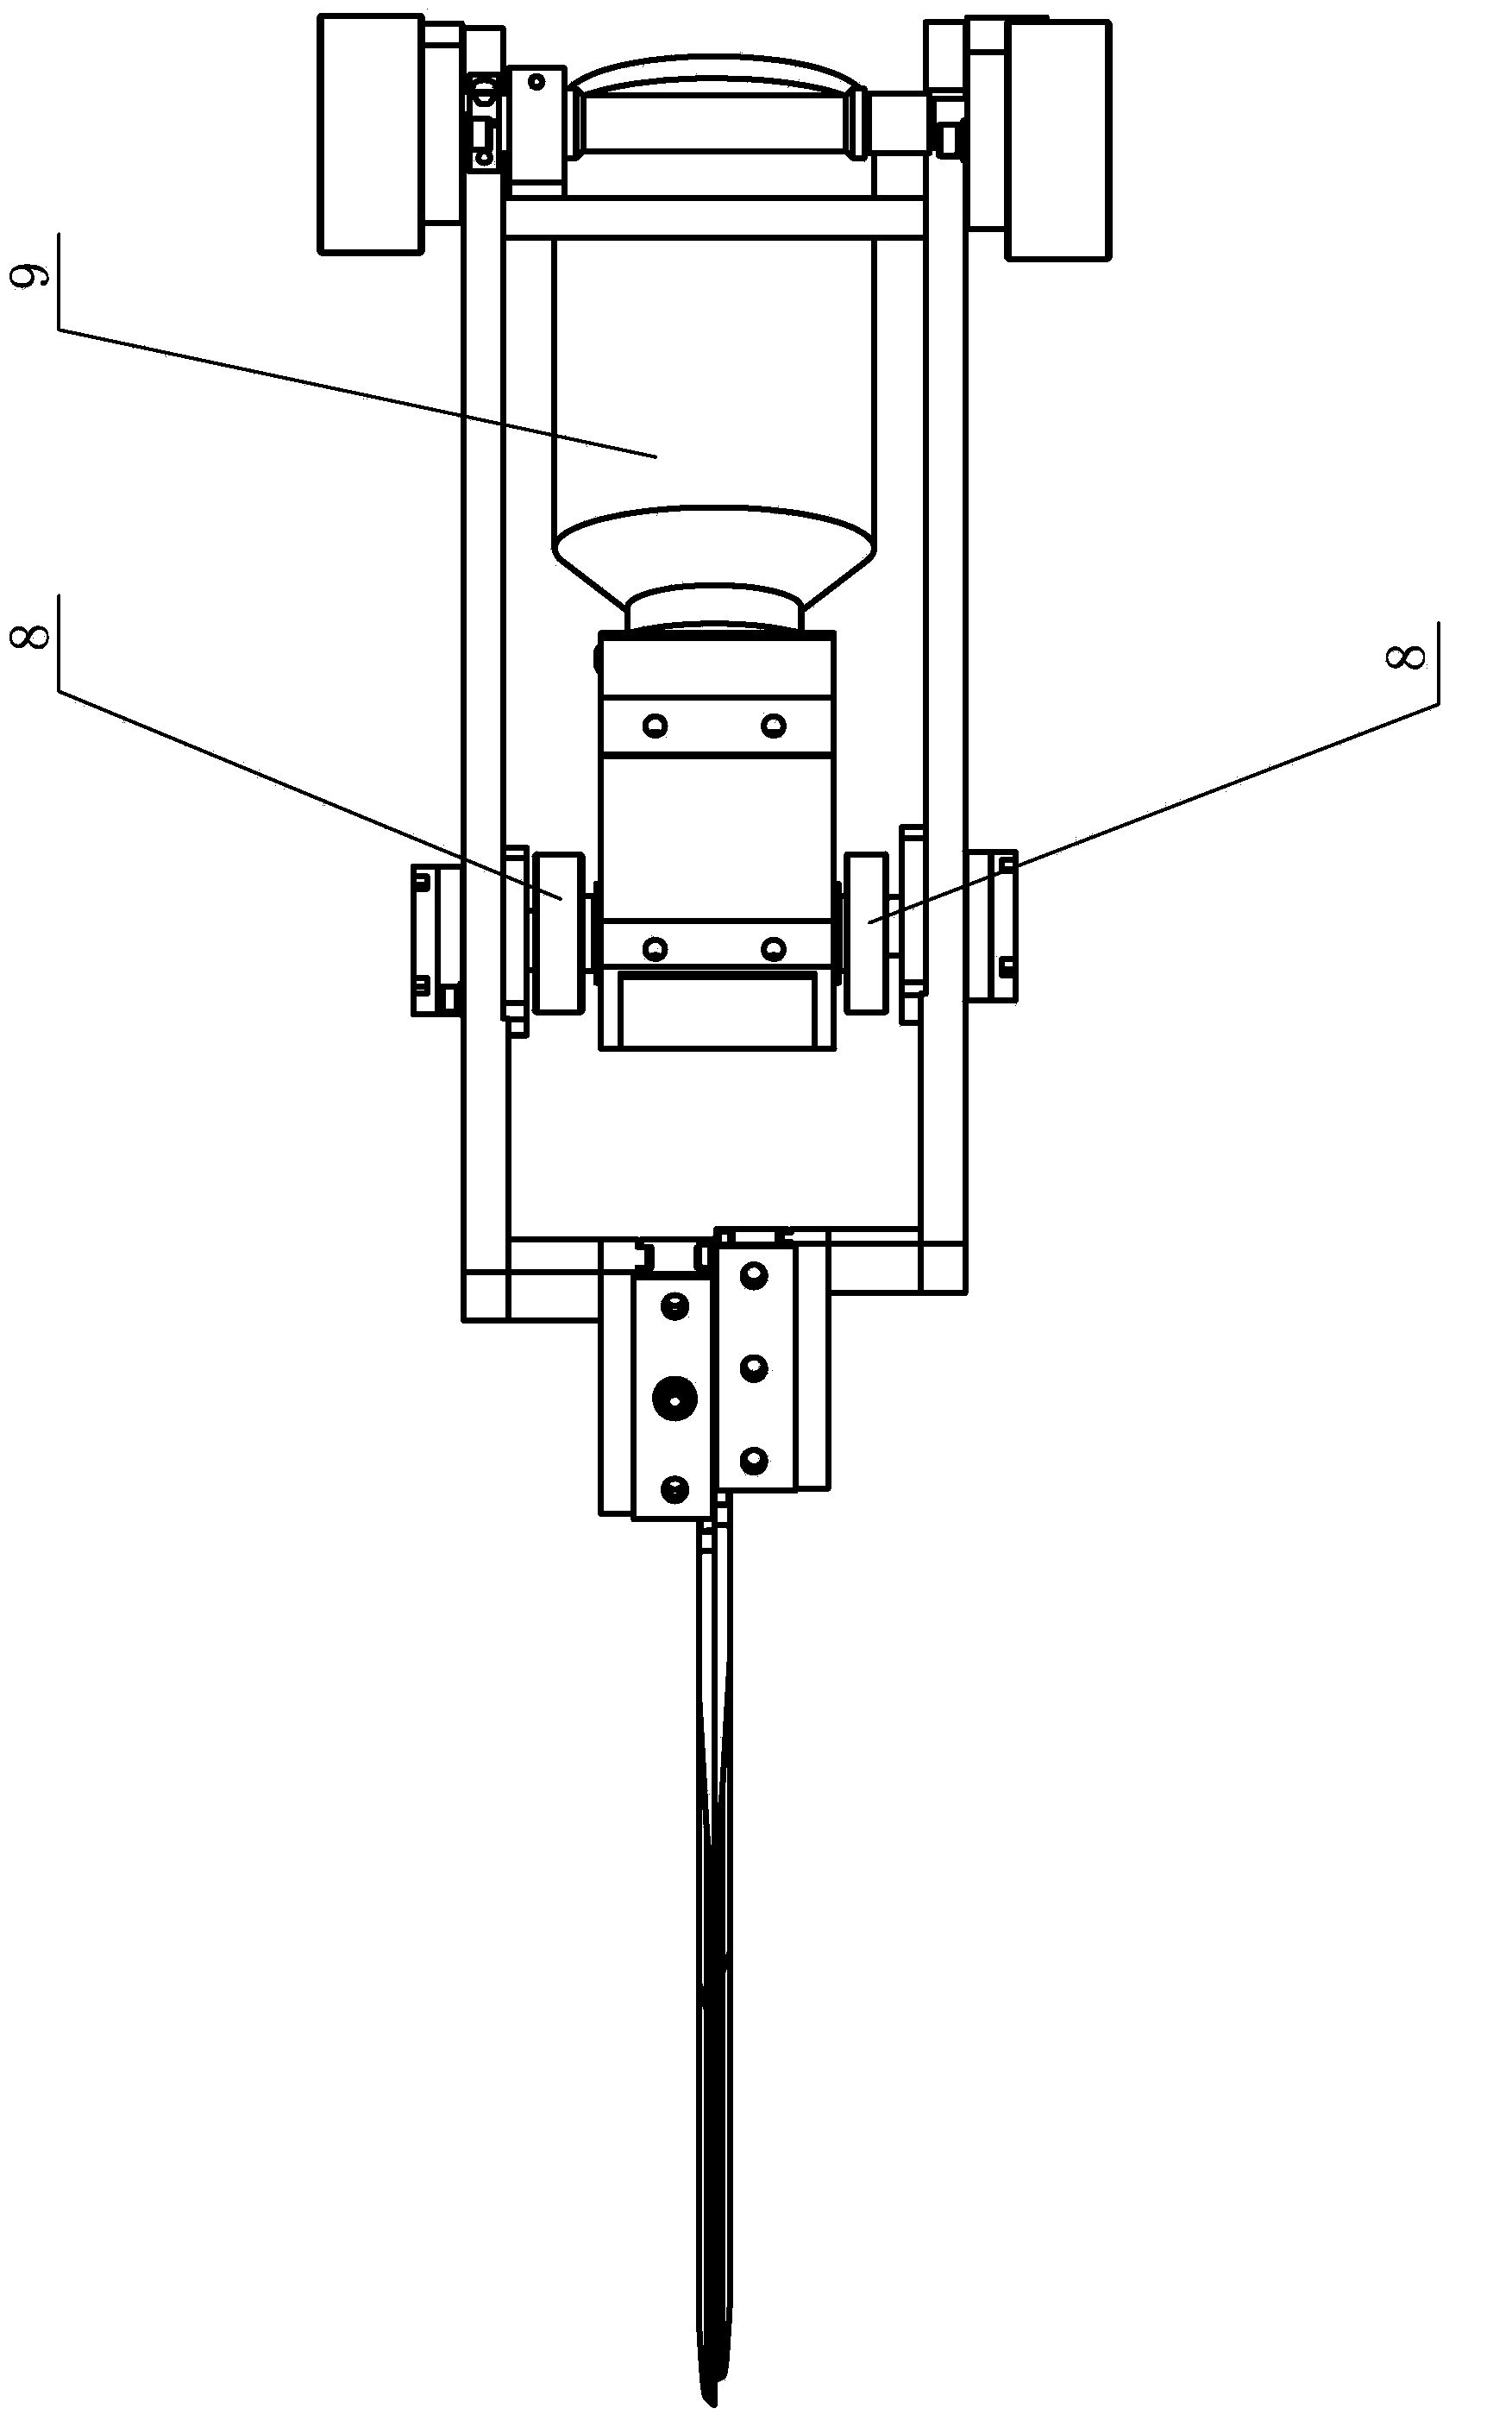 Automatic fifty-fifty splitting robot with single-shaft dual-crank rocking bar mechanism